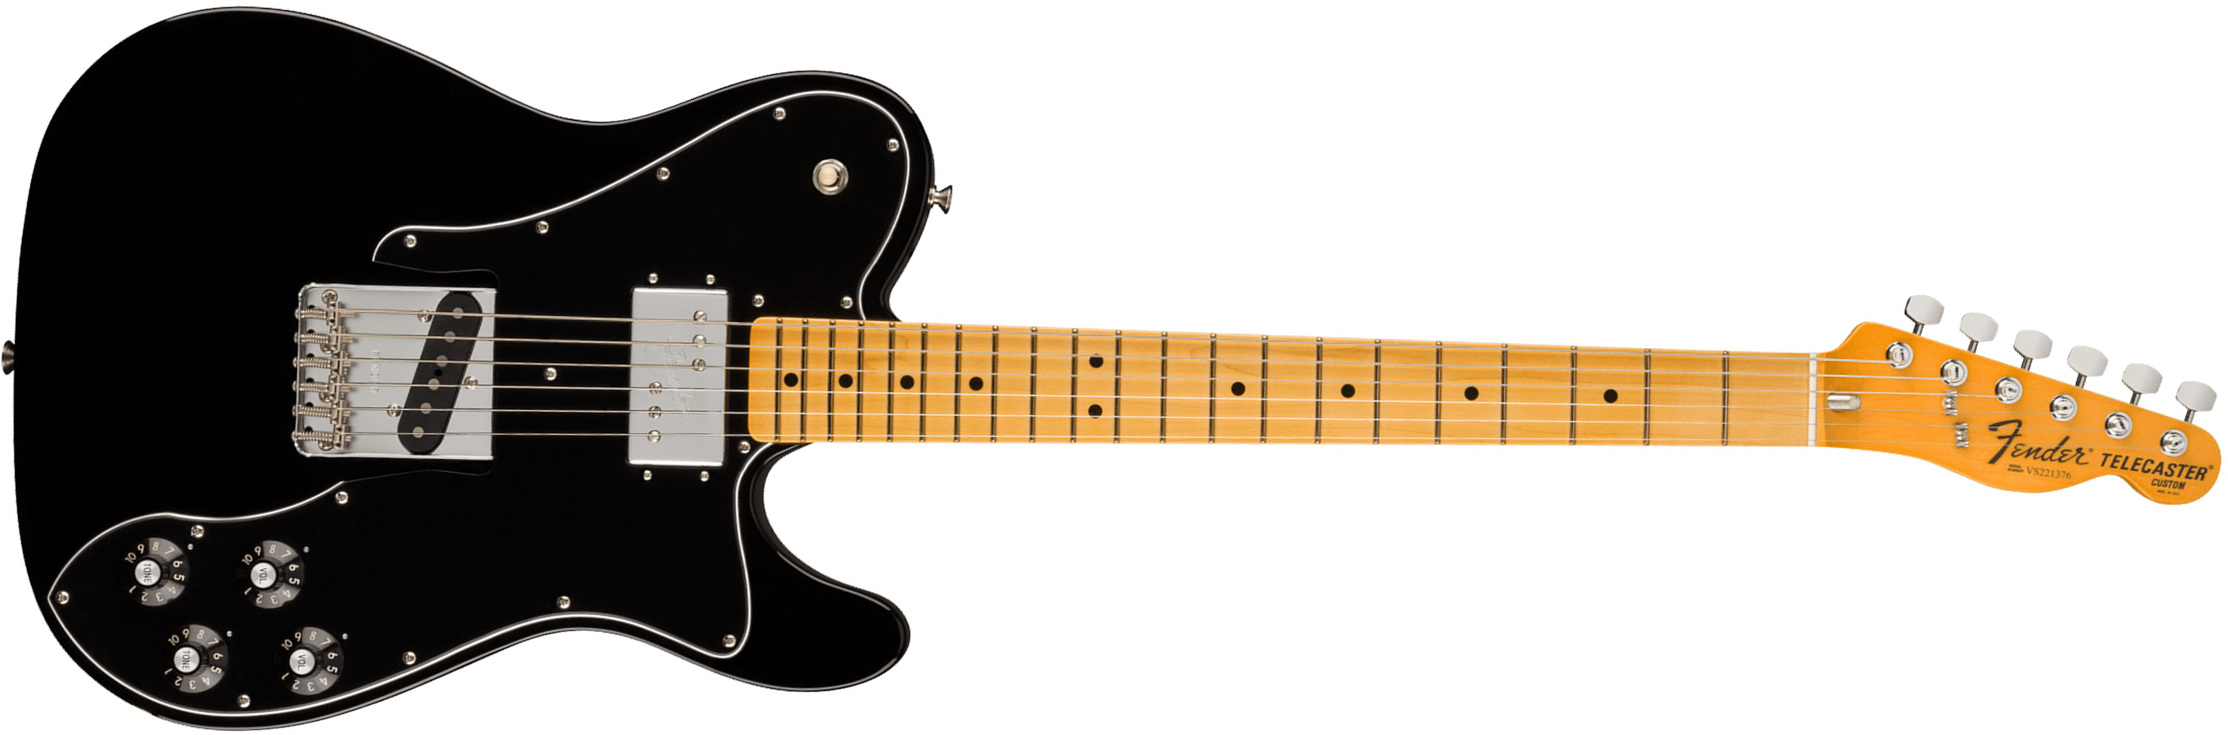 Fender Tele Custom 1977 American Vintage Ii Usa Sh Ht Mn - Black - E-Gitarre in Teleform - Main picture